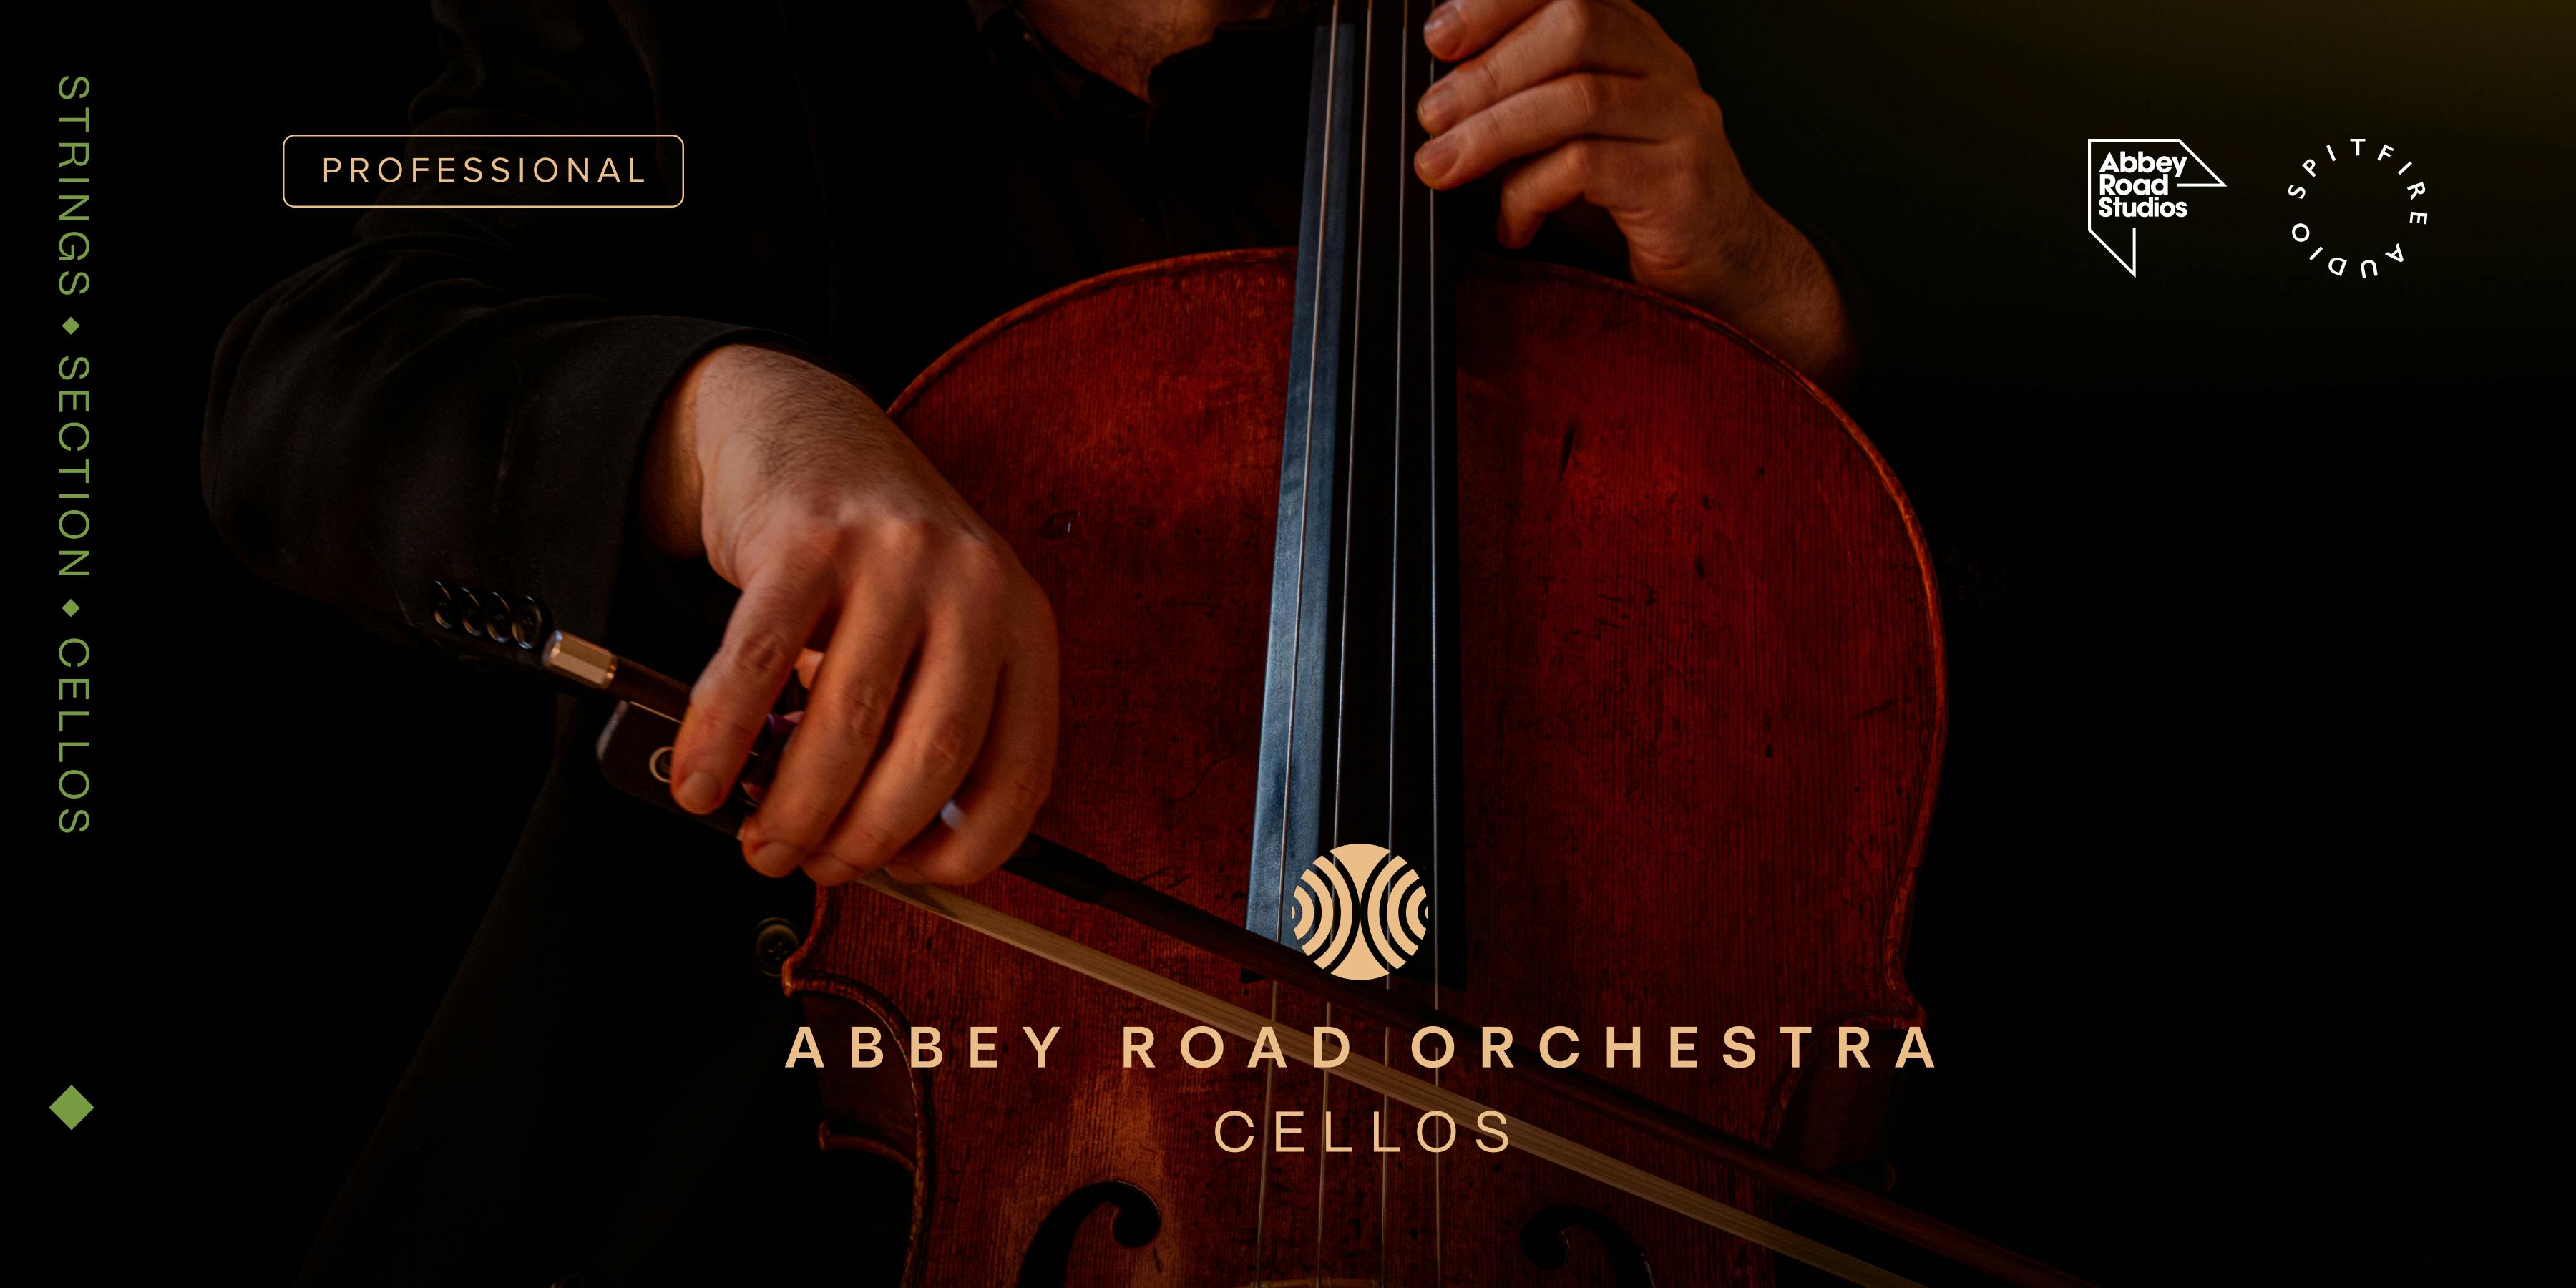 string instruments cello